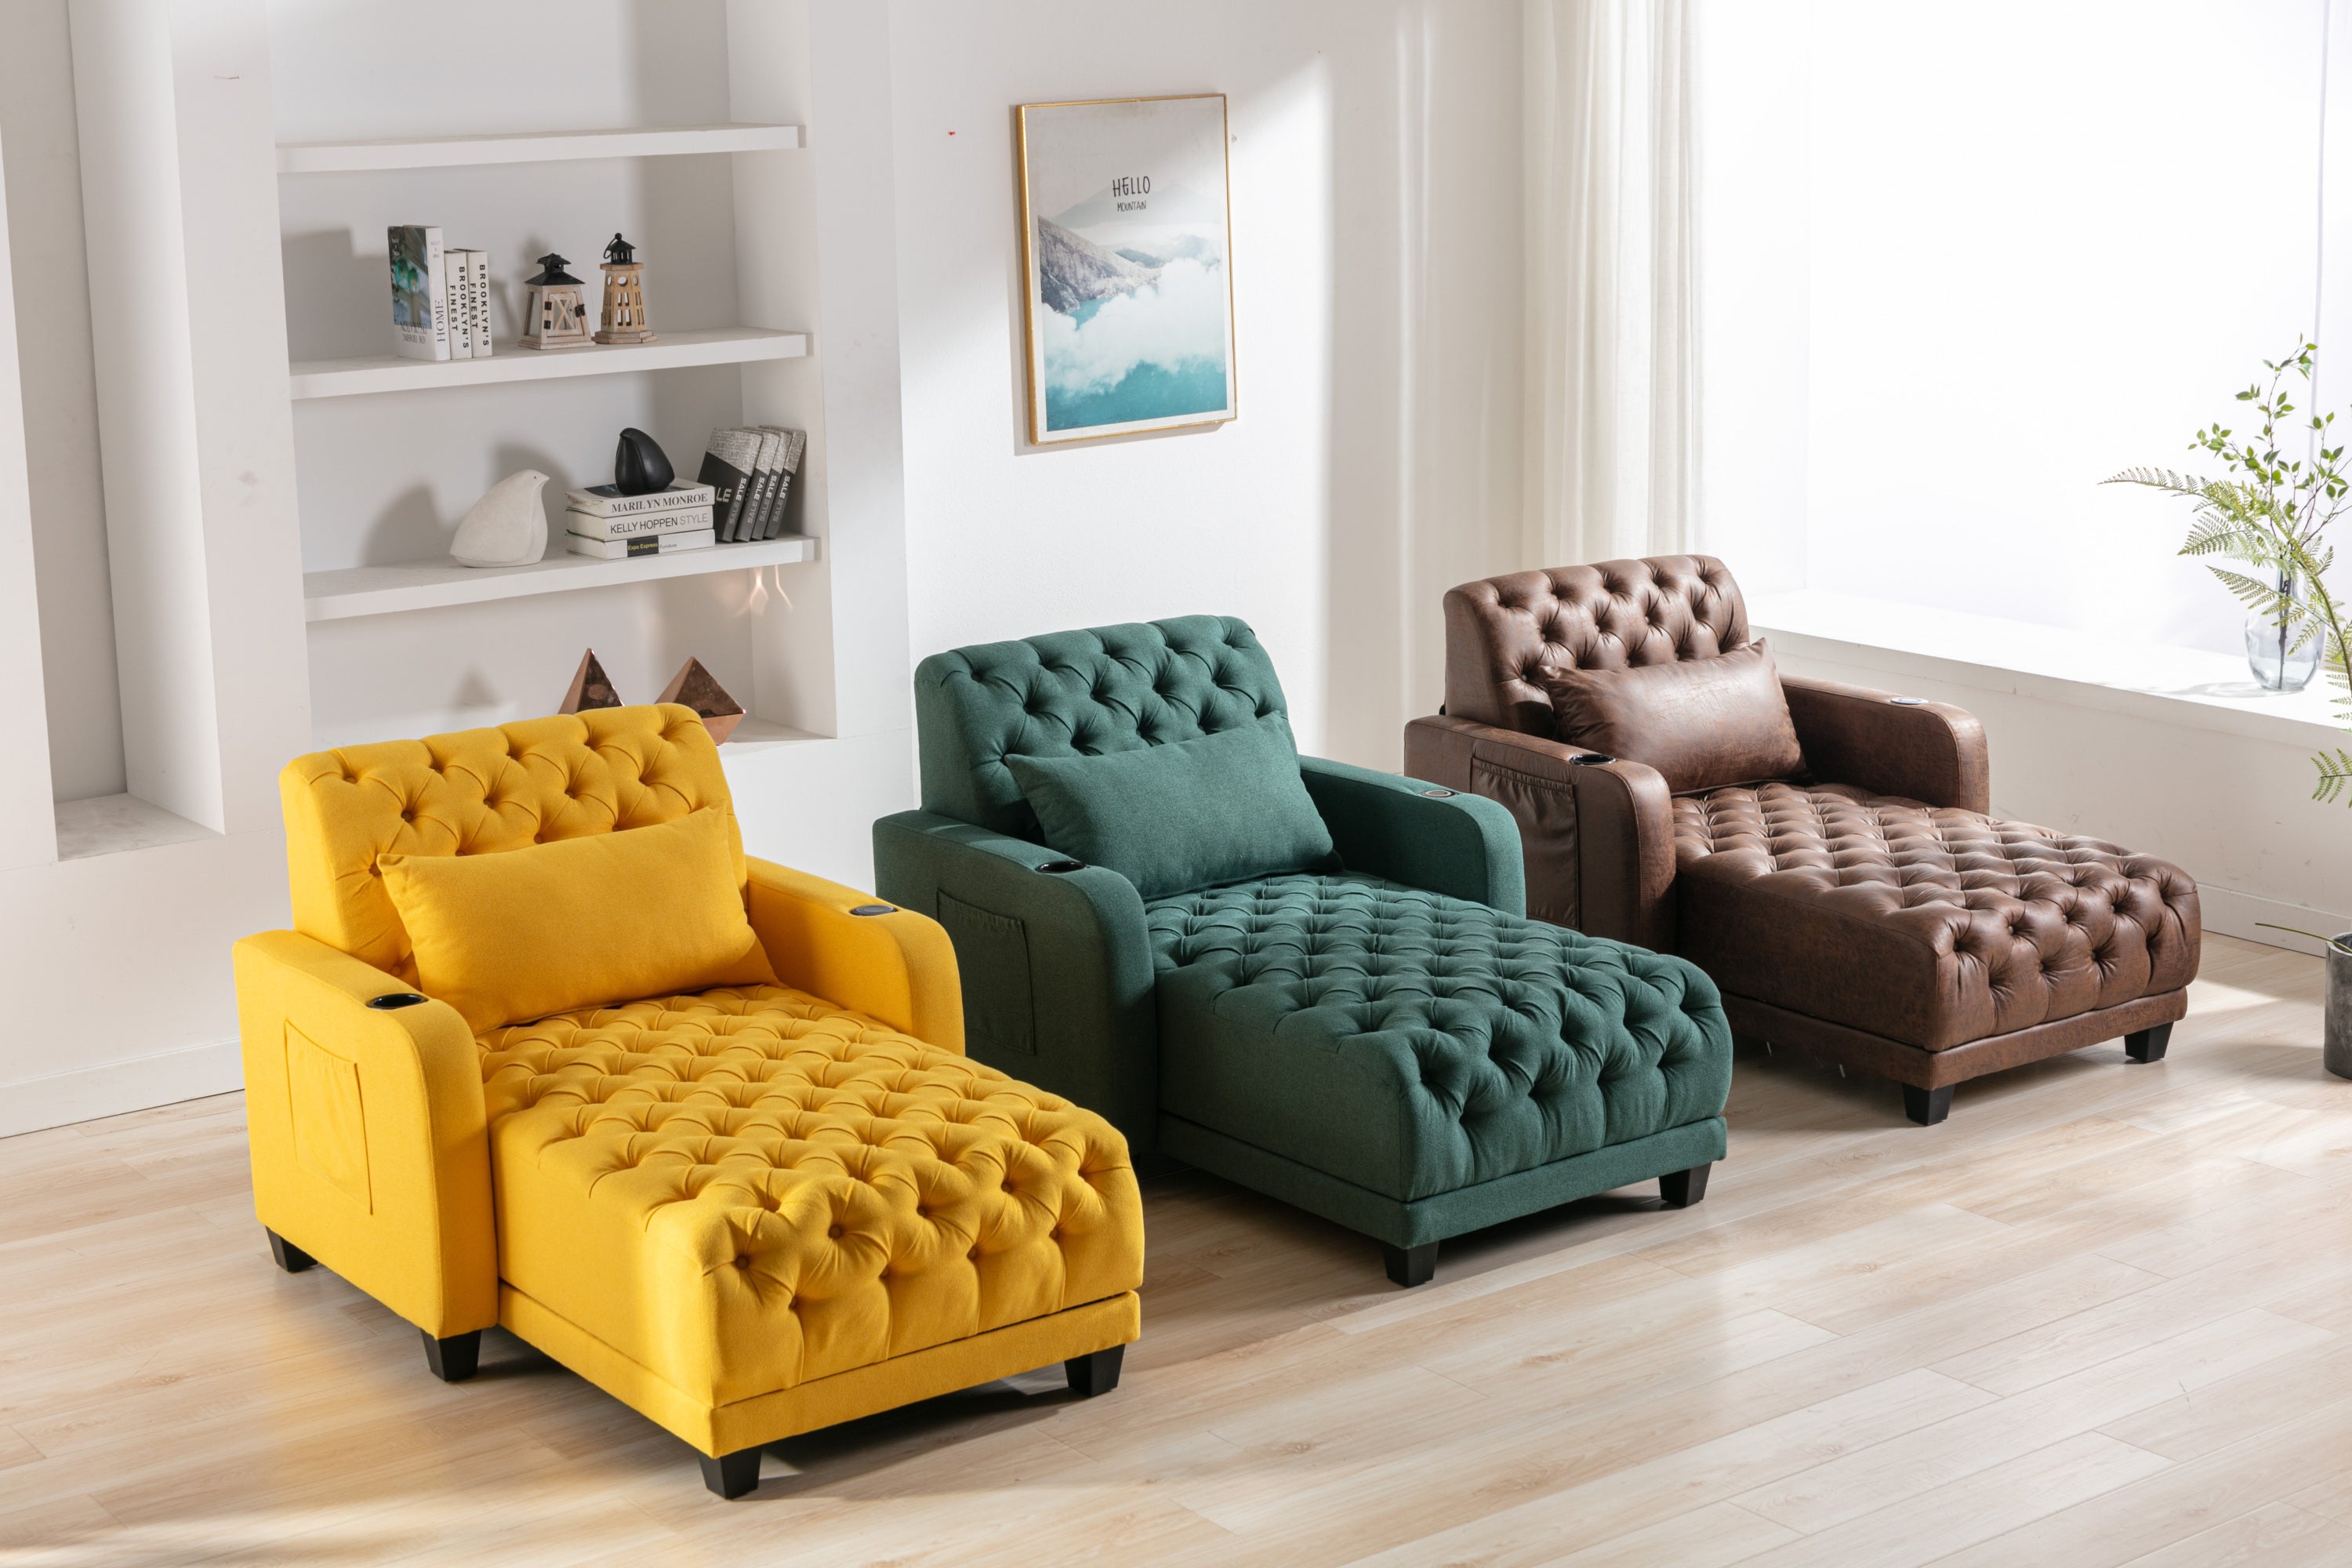 COOLMORE  Living Room Leisure Sofa /Barry sofa (Brown)